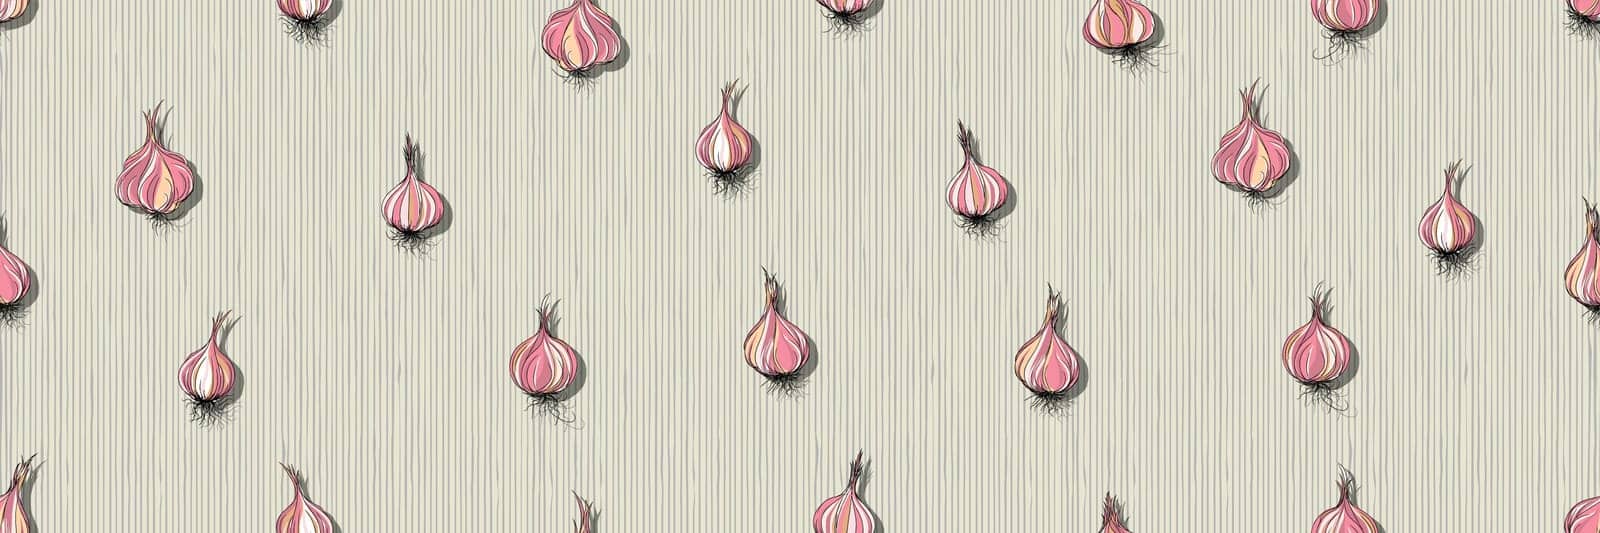 Garlic repeating pattern by Lirch